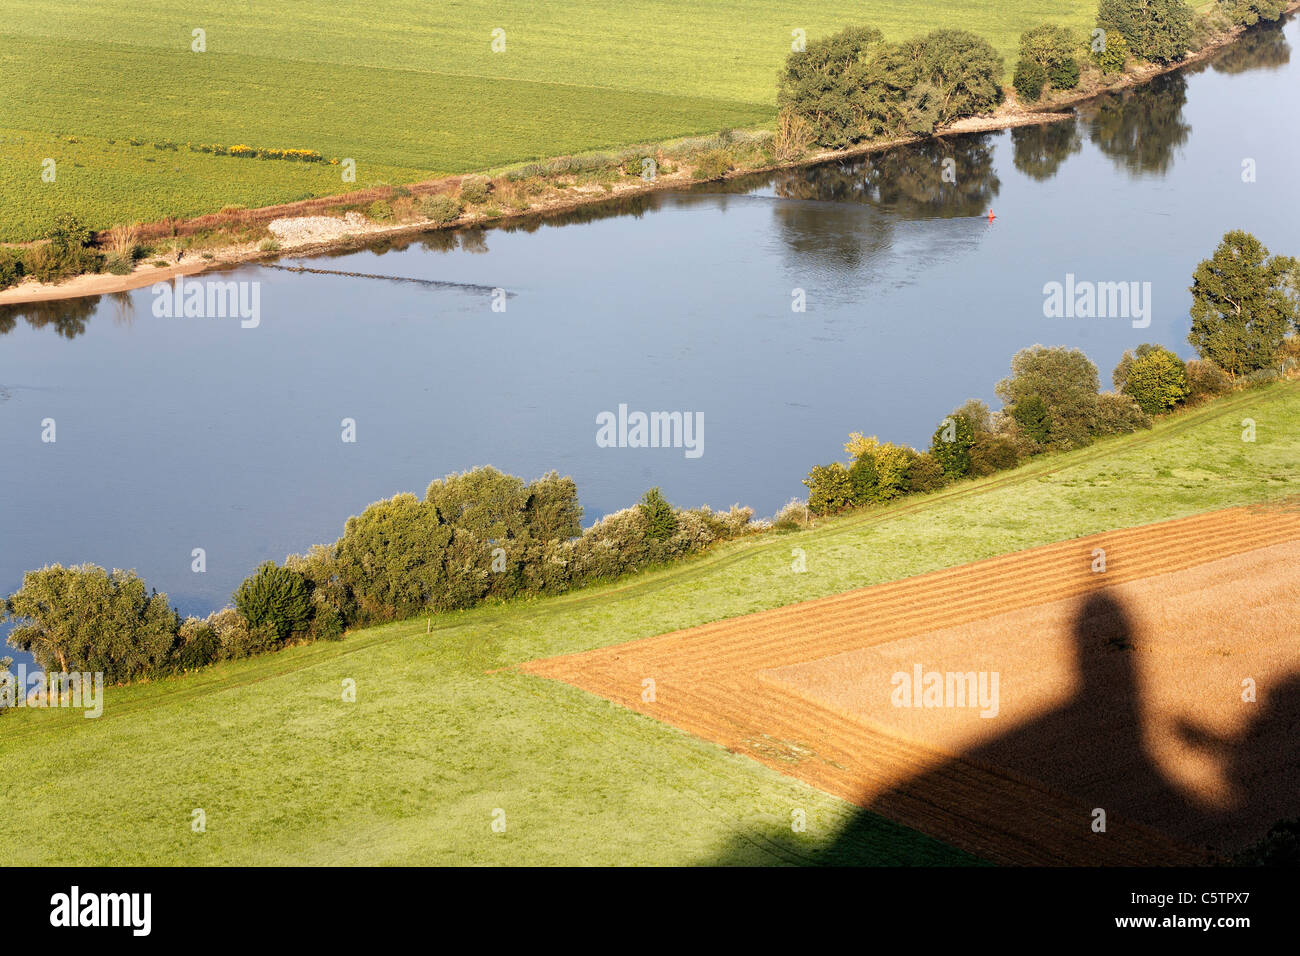 Germany, Lower Bavaria, View of danube river near bogen Stock Photo